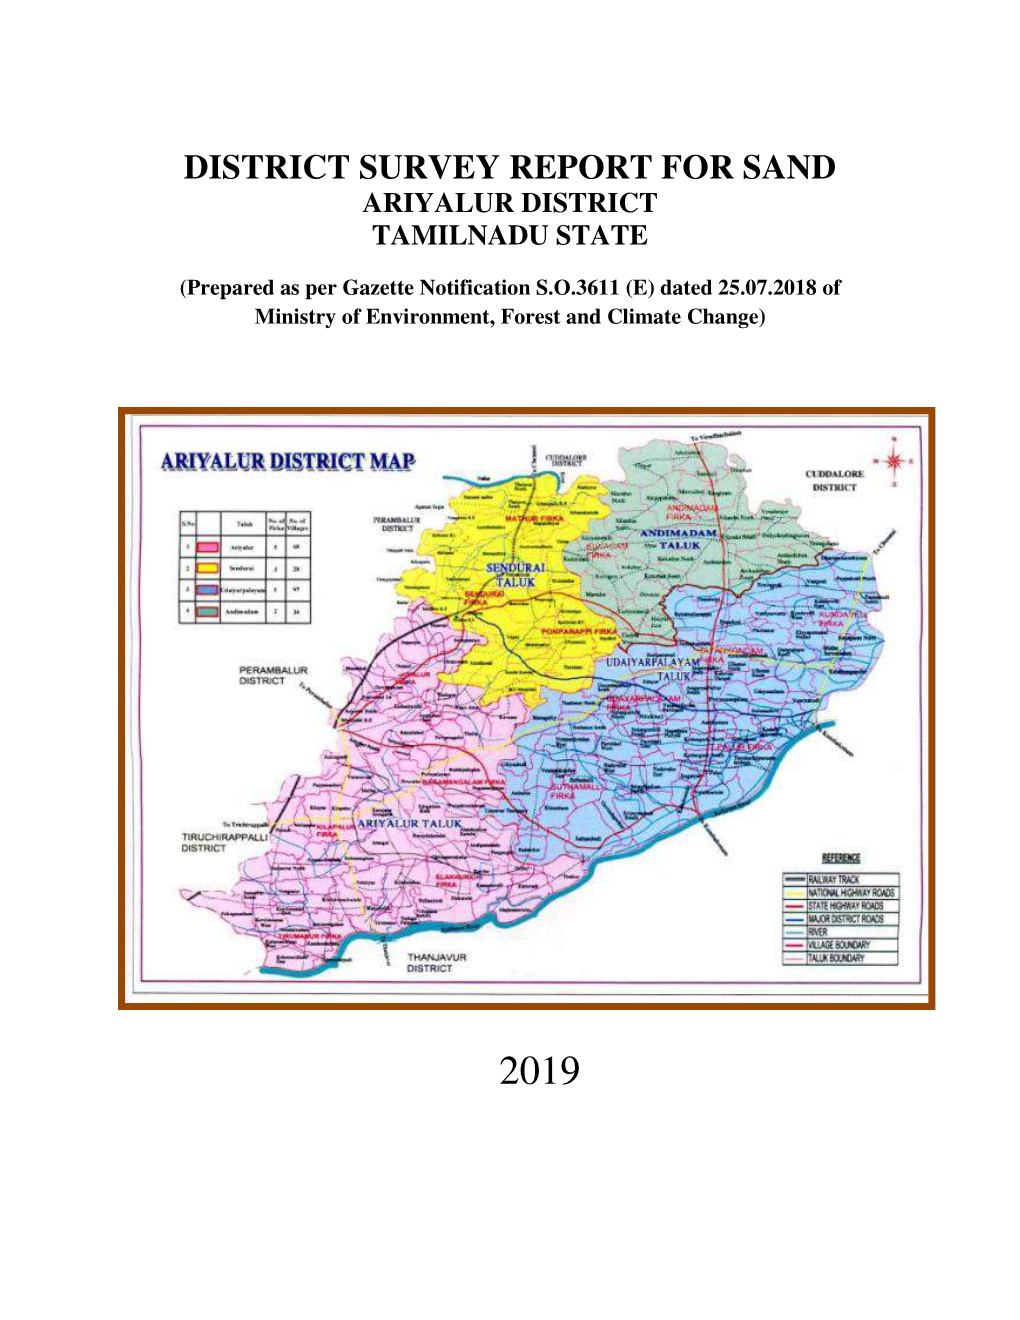 District Survey Report for Sand Ariyalur District Tamilnadu State